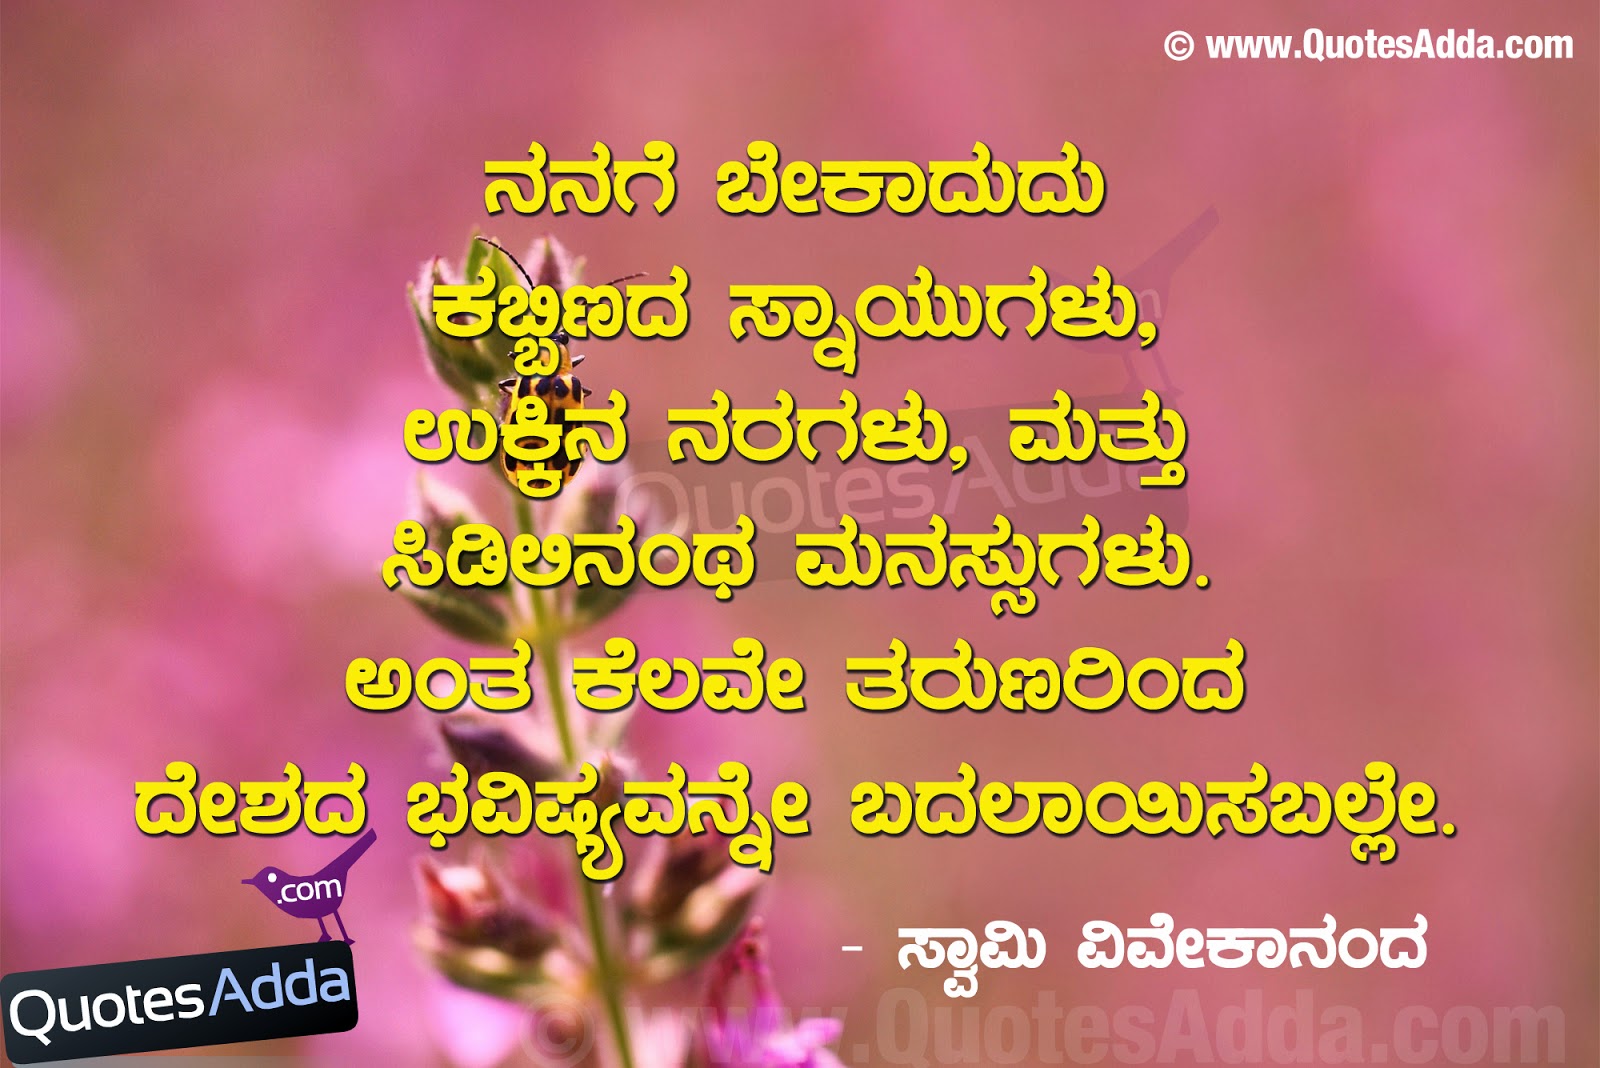 Swami Vivekananda Quotes in Kannada JUN18 QuotesAdda